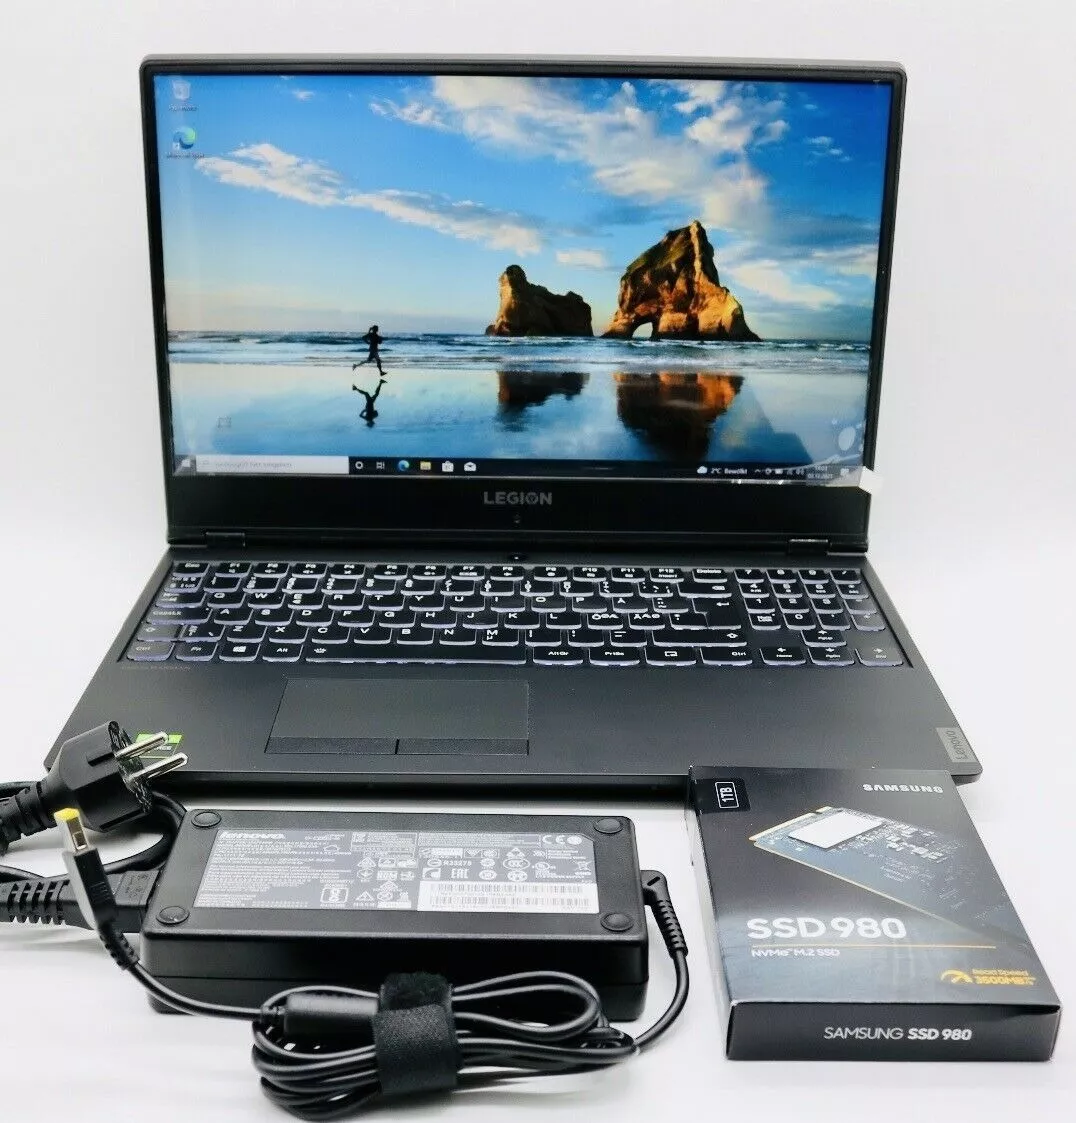 Lenovo Legion Y540 Laptop 15.6 144hz Core I5-9300h 8gb 1tb